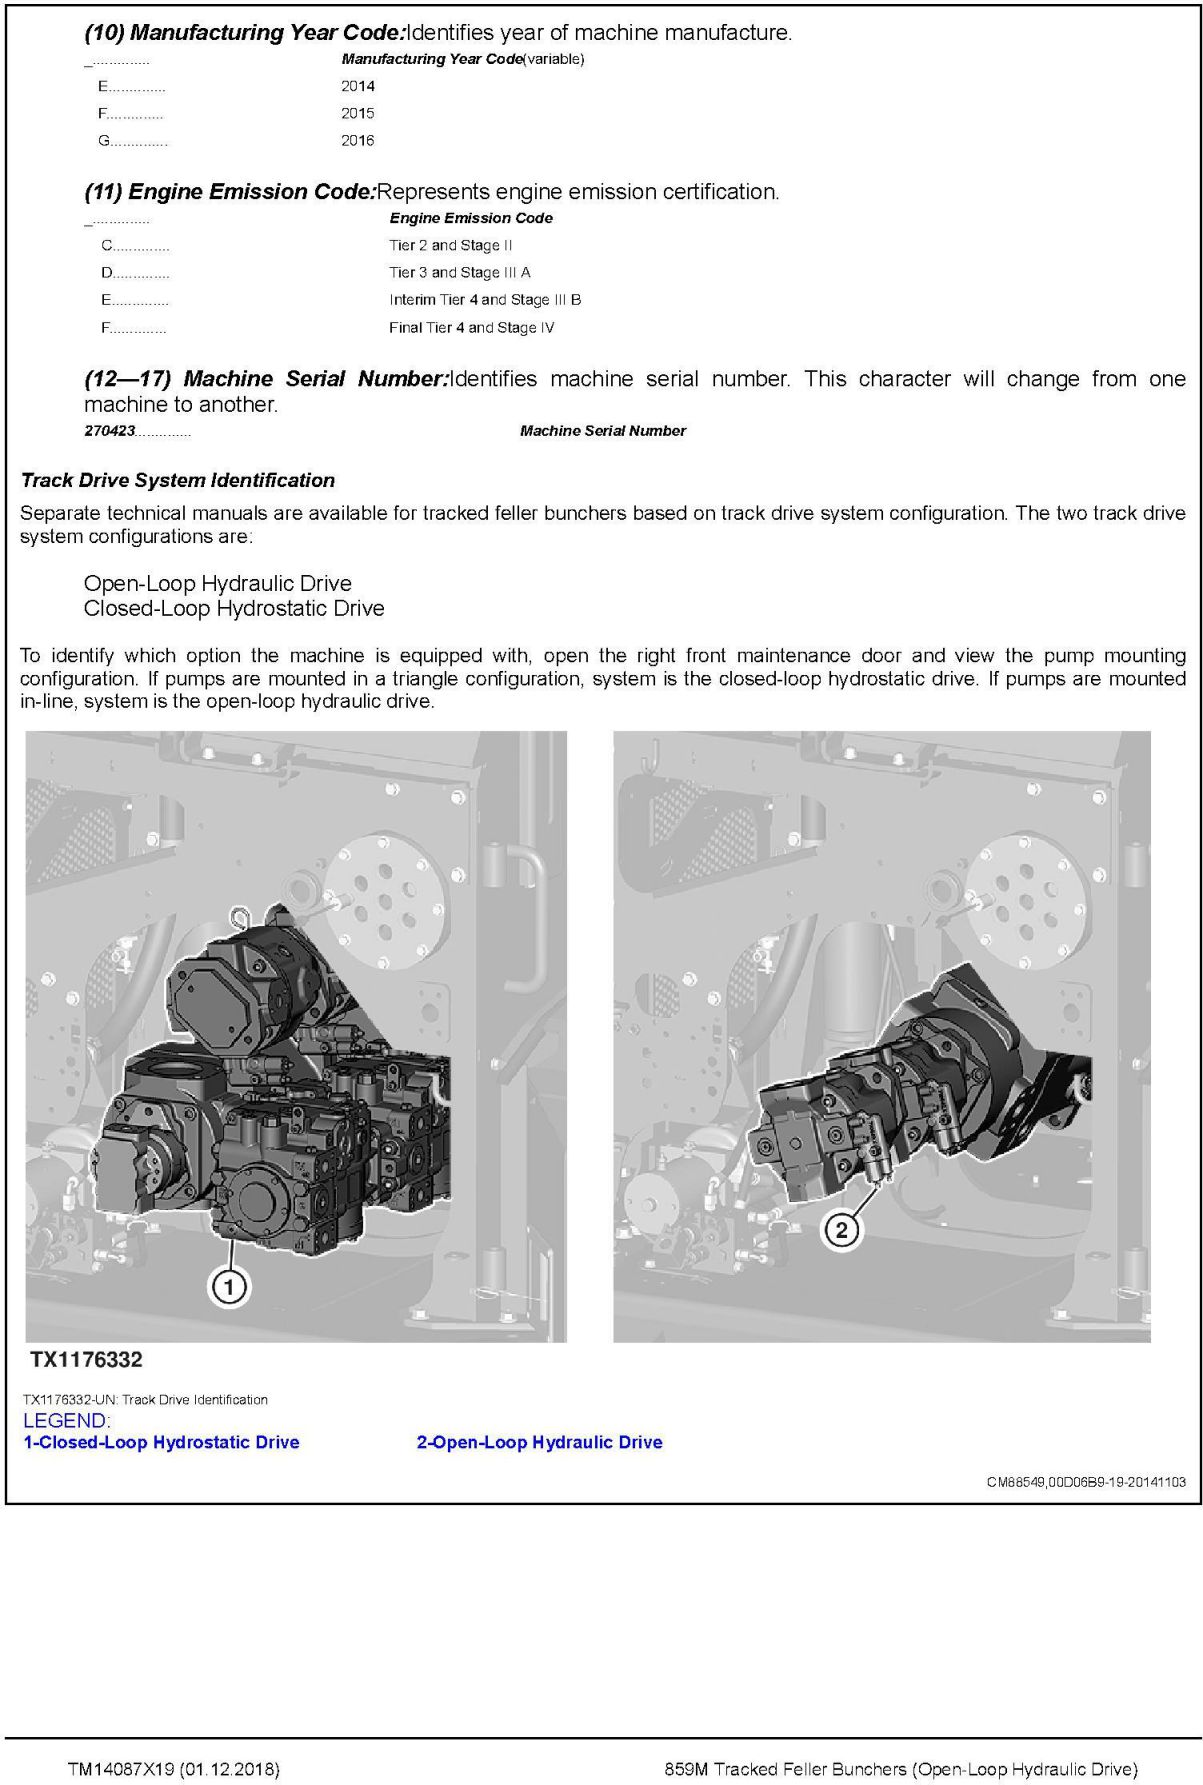 John Deere Agricultural 859M Open-Loop Technical Manual TM14087X19_1